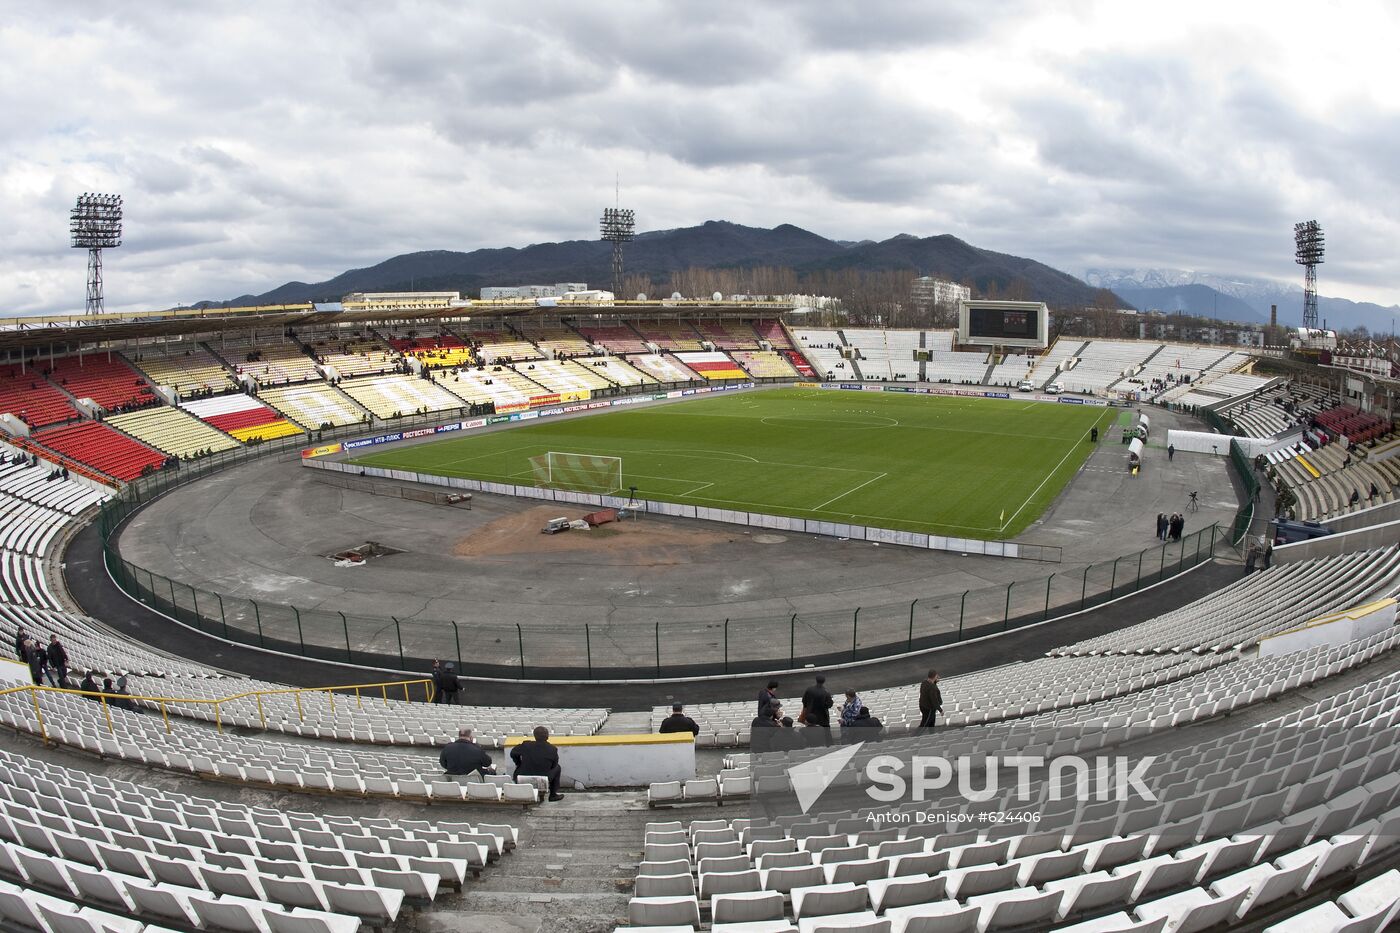 Republican "Spartak" stadium in Vladikavkaz